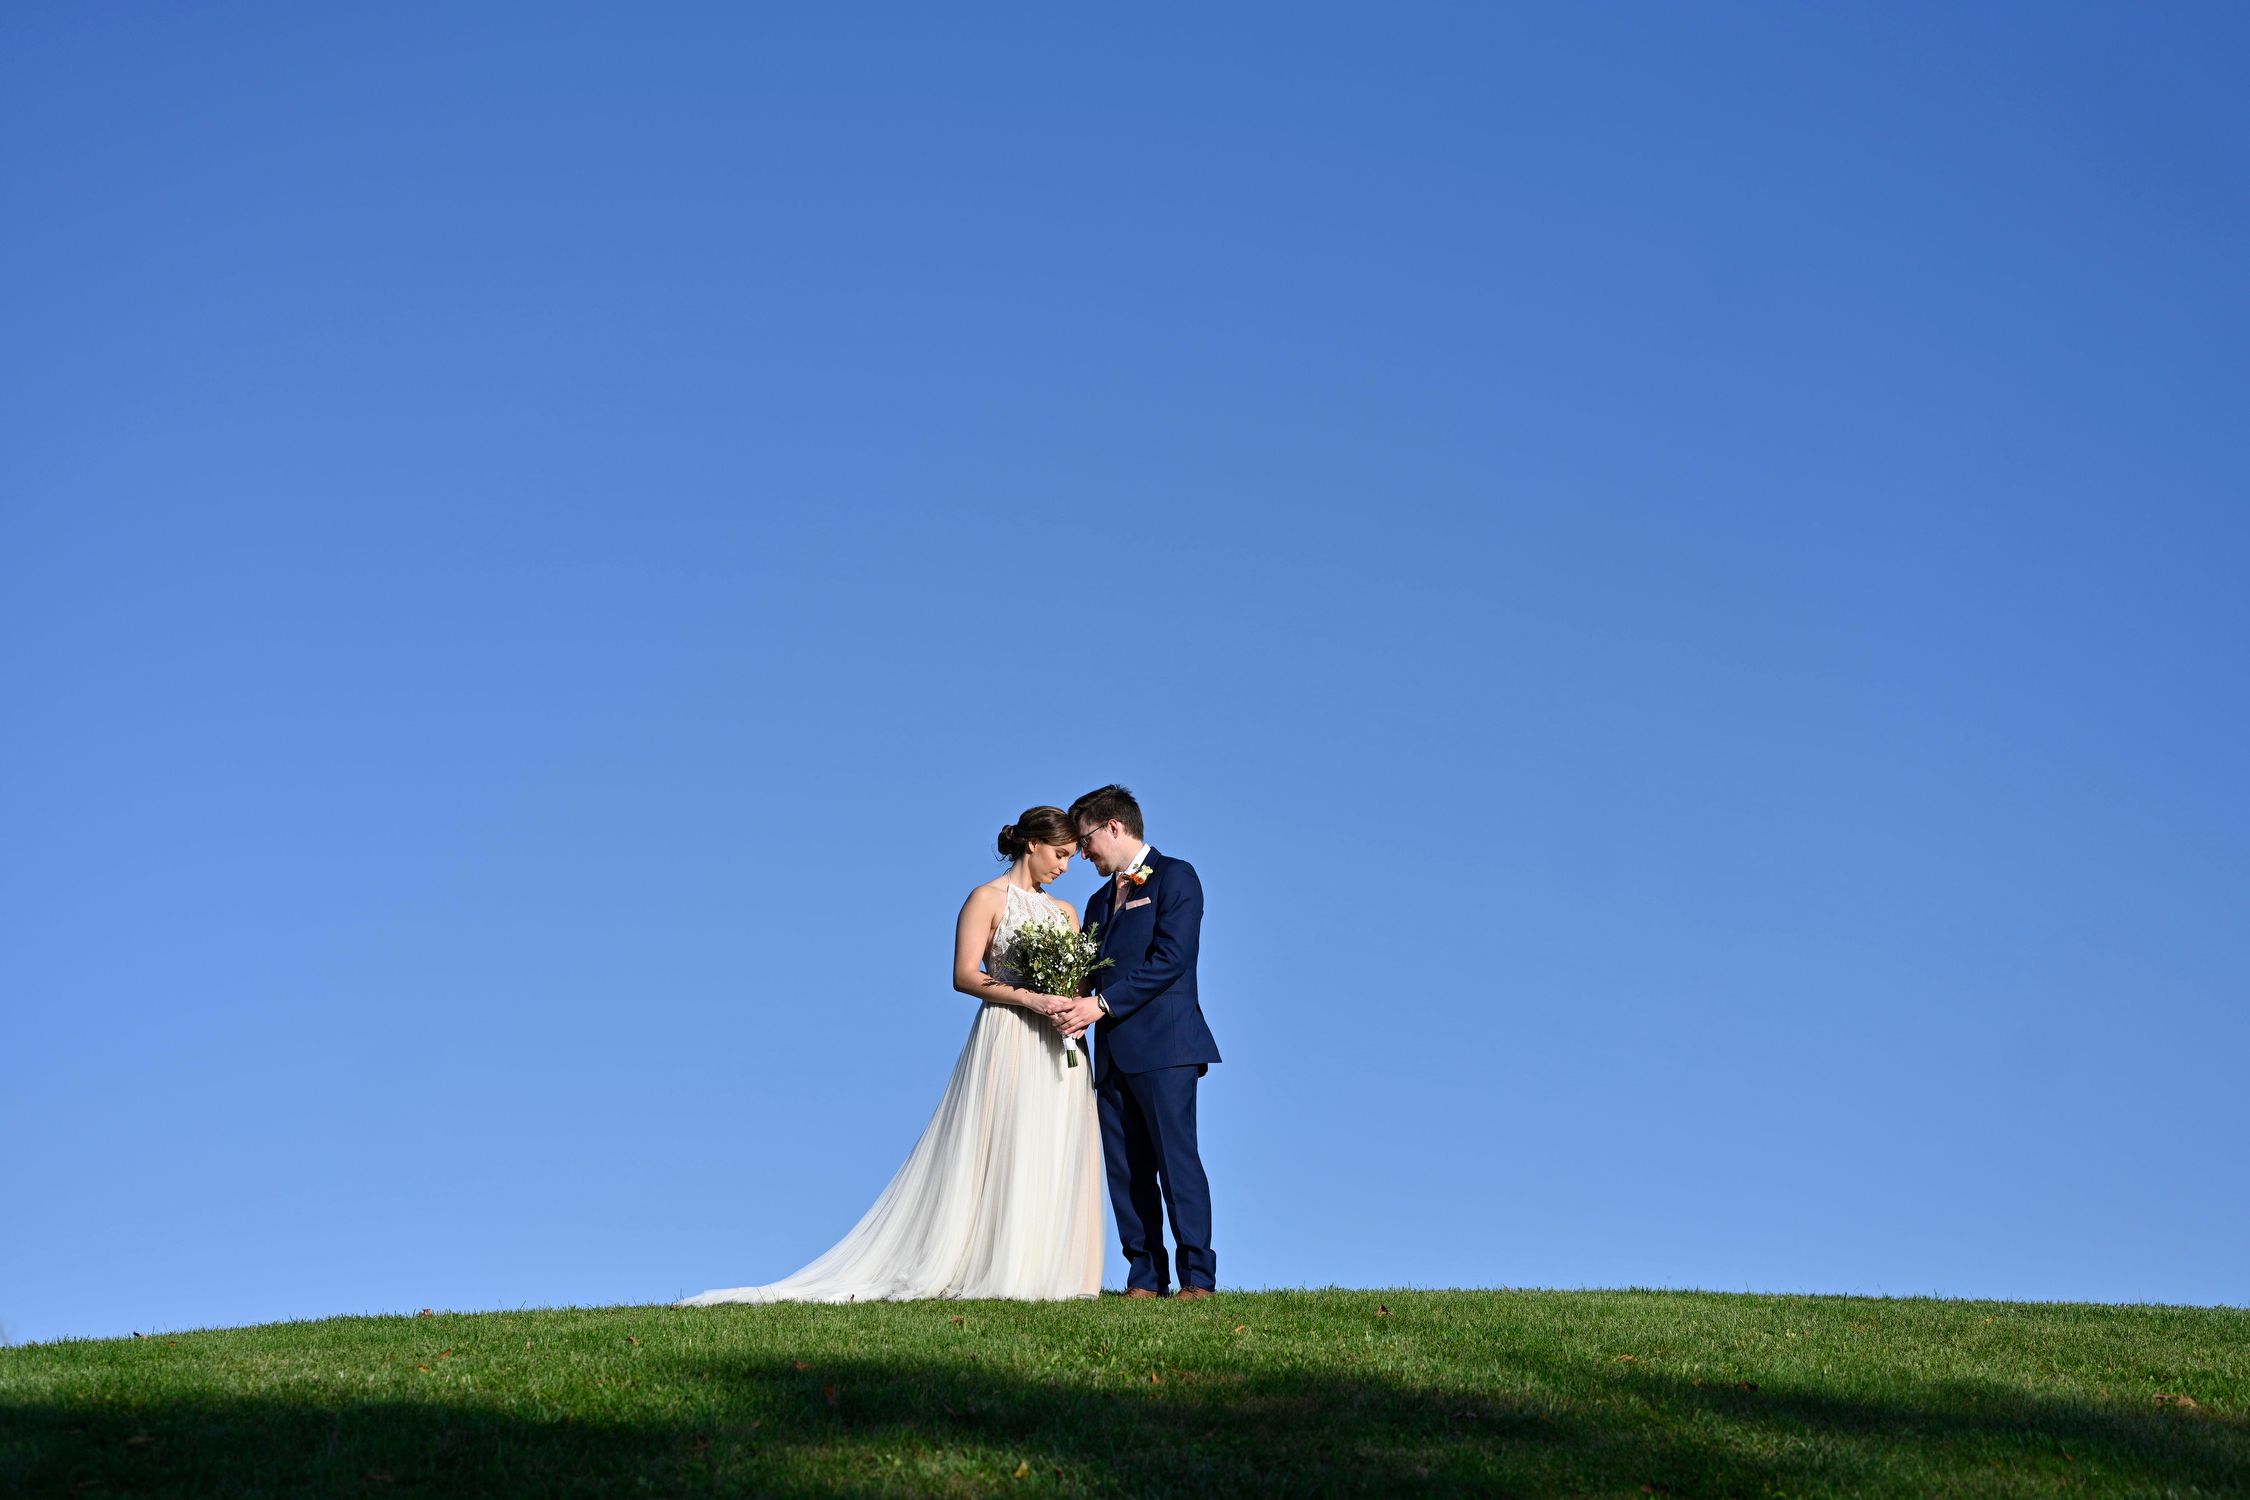 Wedding Embrace Against The Blue Sky